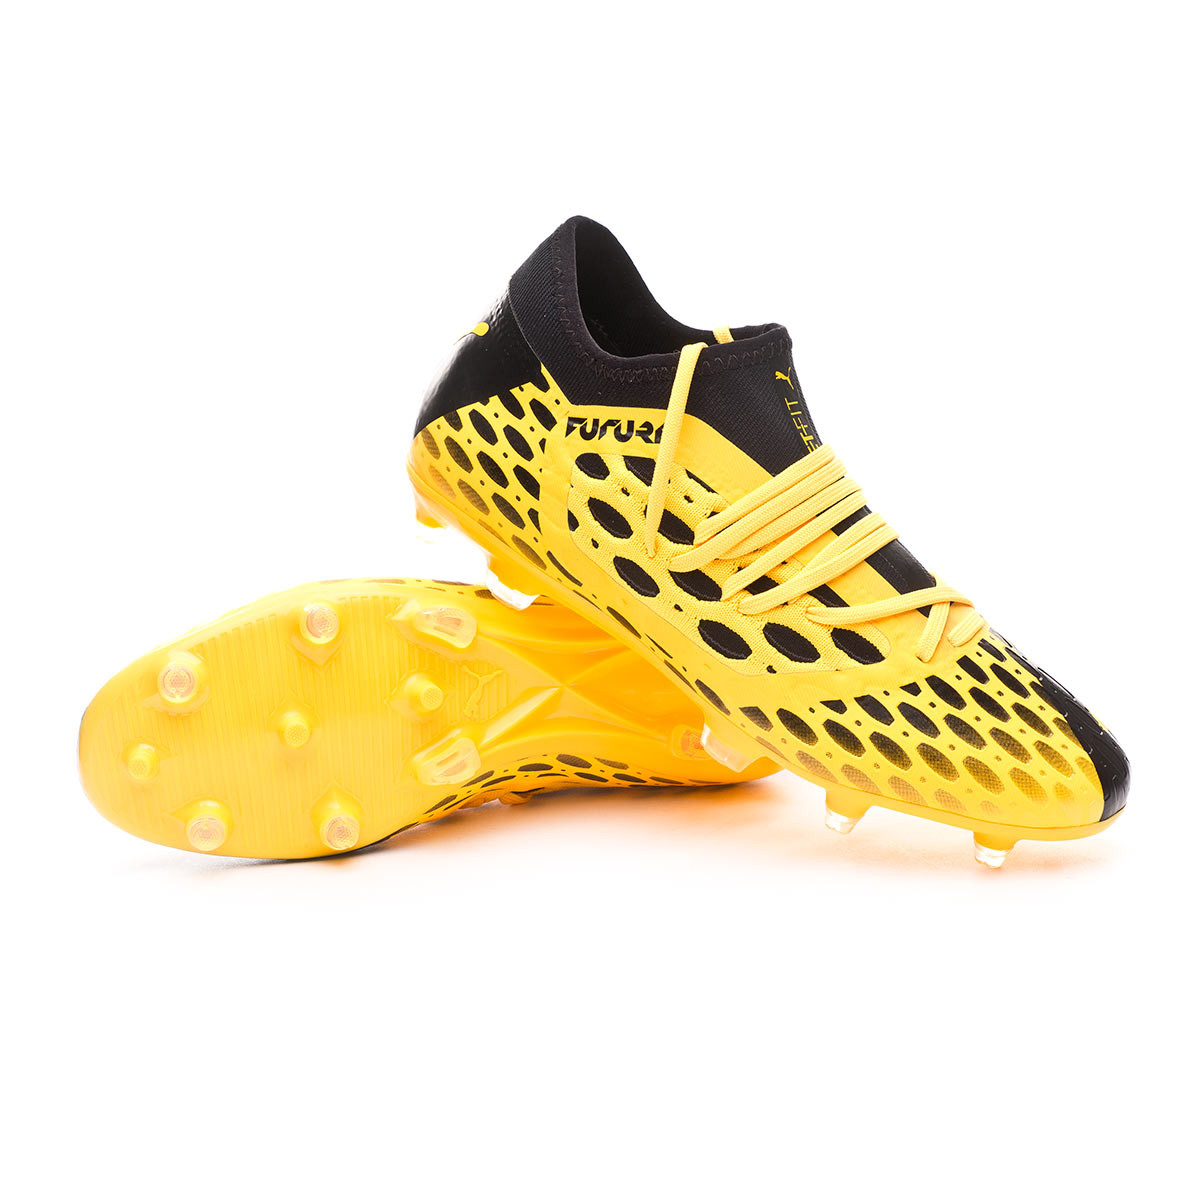 Football Boots Puma Future 5 3 Netfit Fg Ag Ultra Yellow Puma